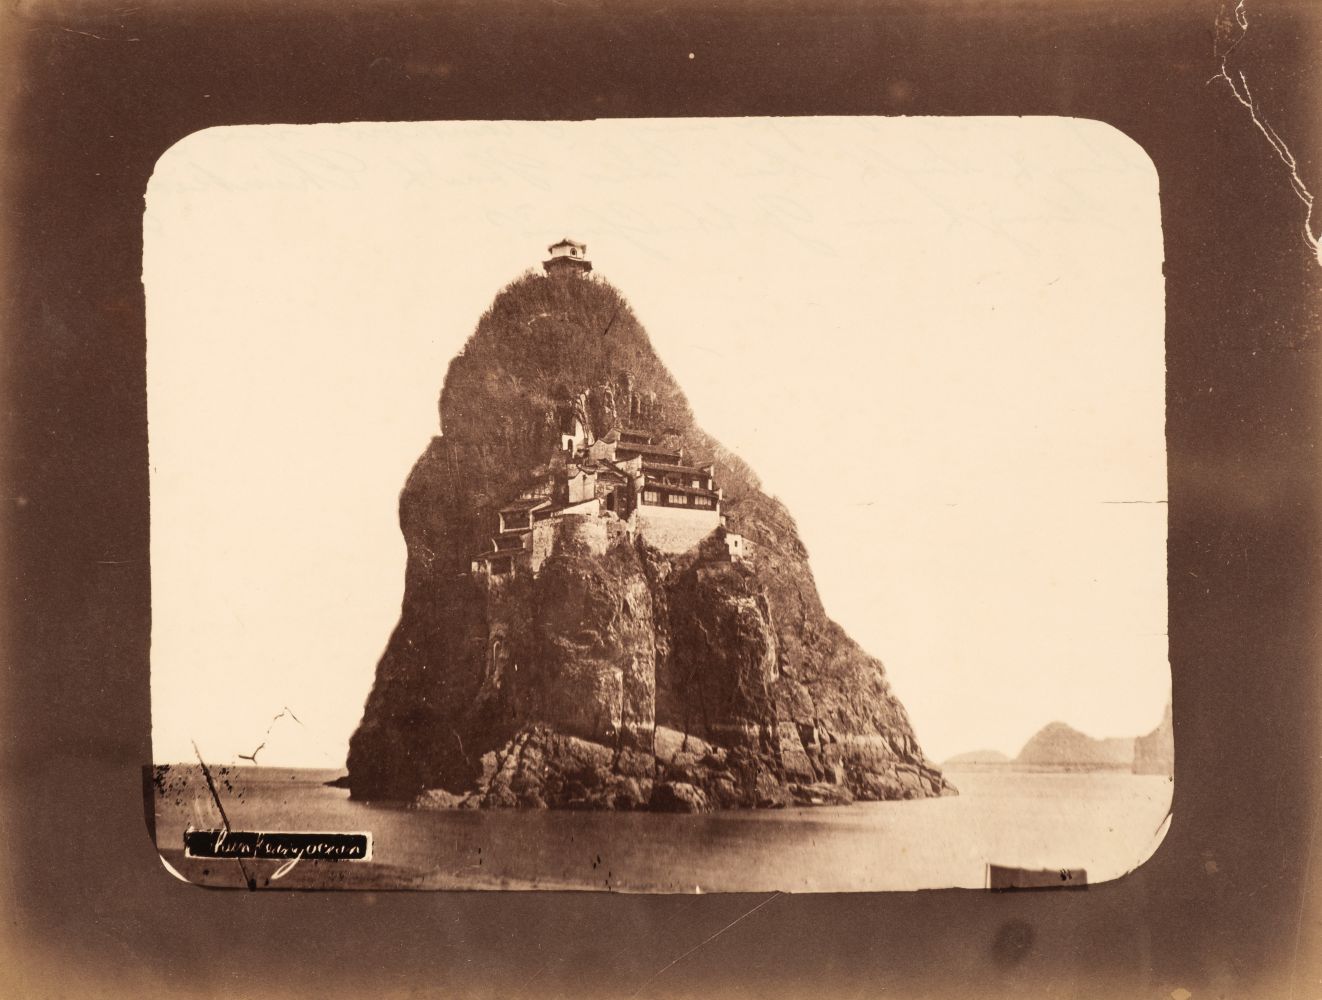 China. Island in the Yangtze River near Chinkiang, Hankow, by Major James Crombie Watson, c. 1870